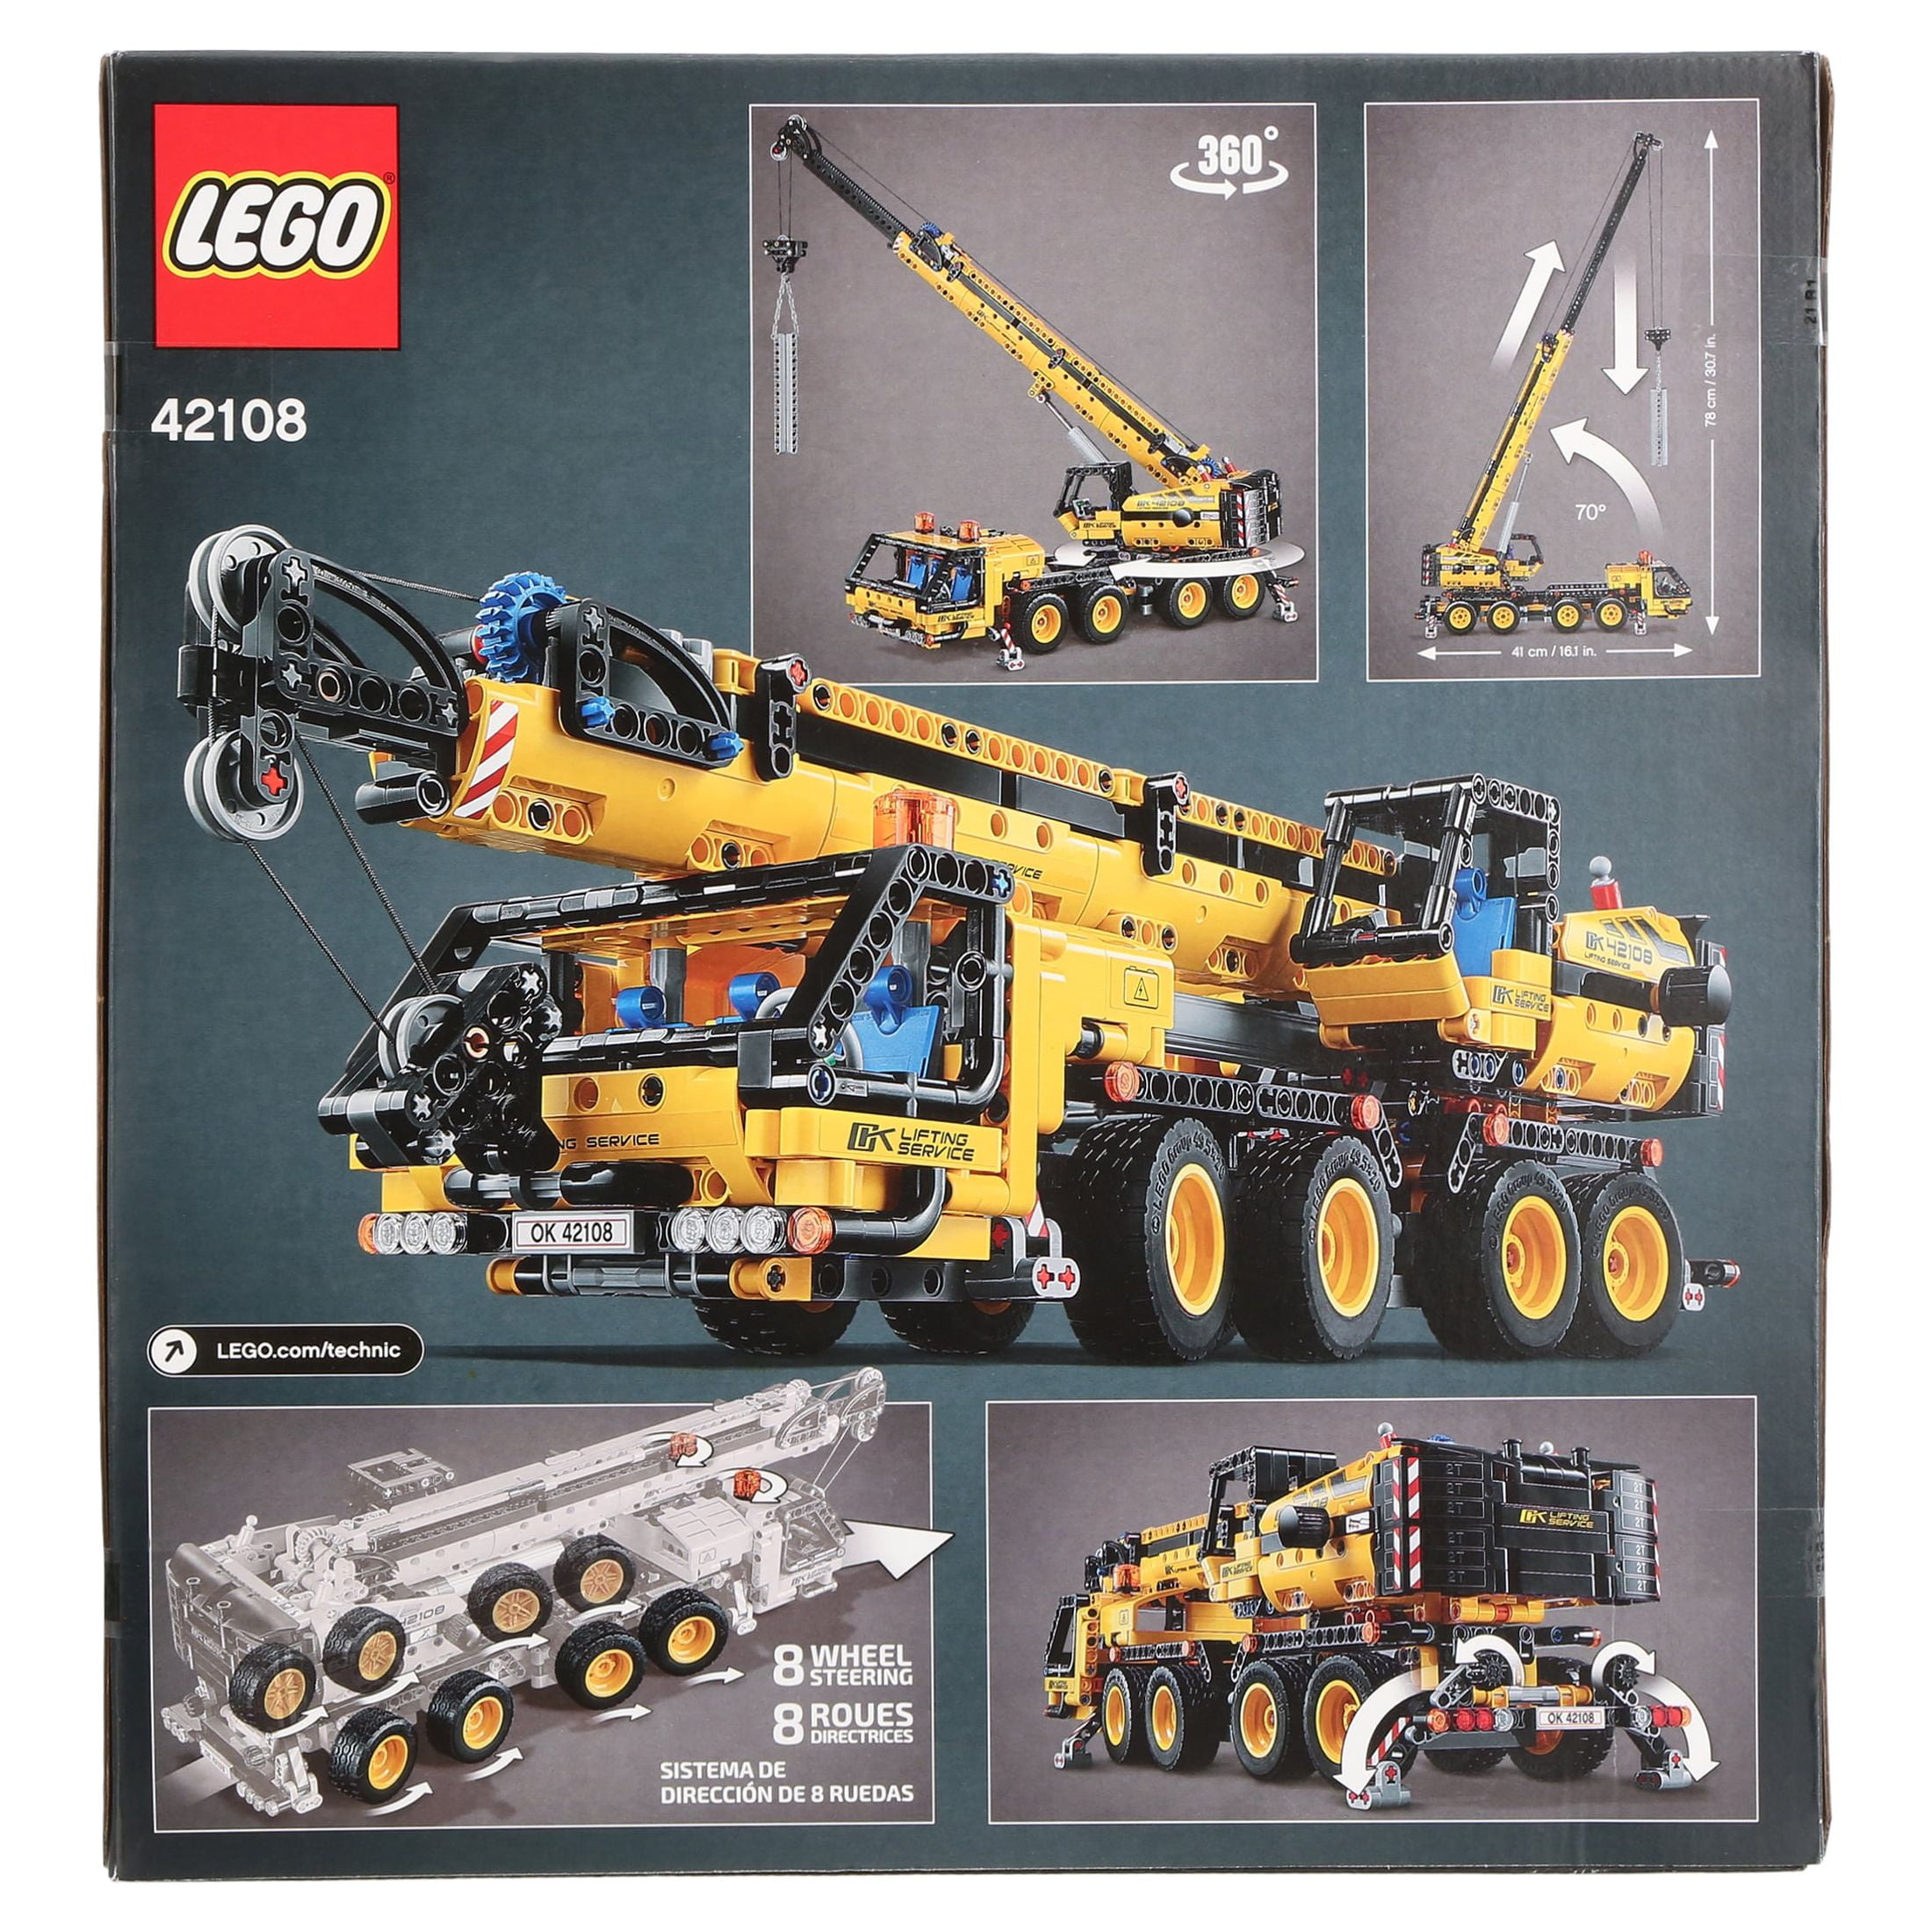 LEGO Technic Mobile Crane 42108 Construction Toy Building Kit